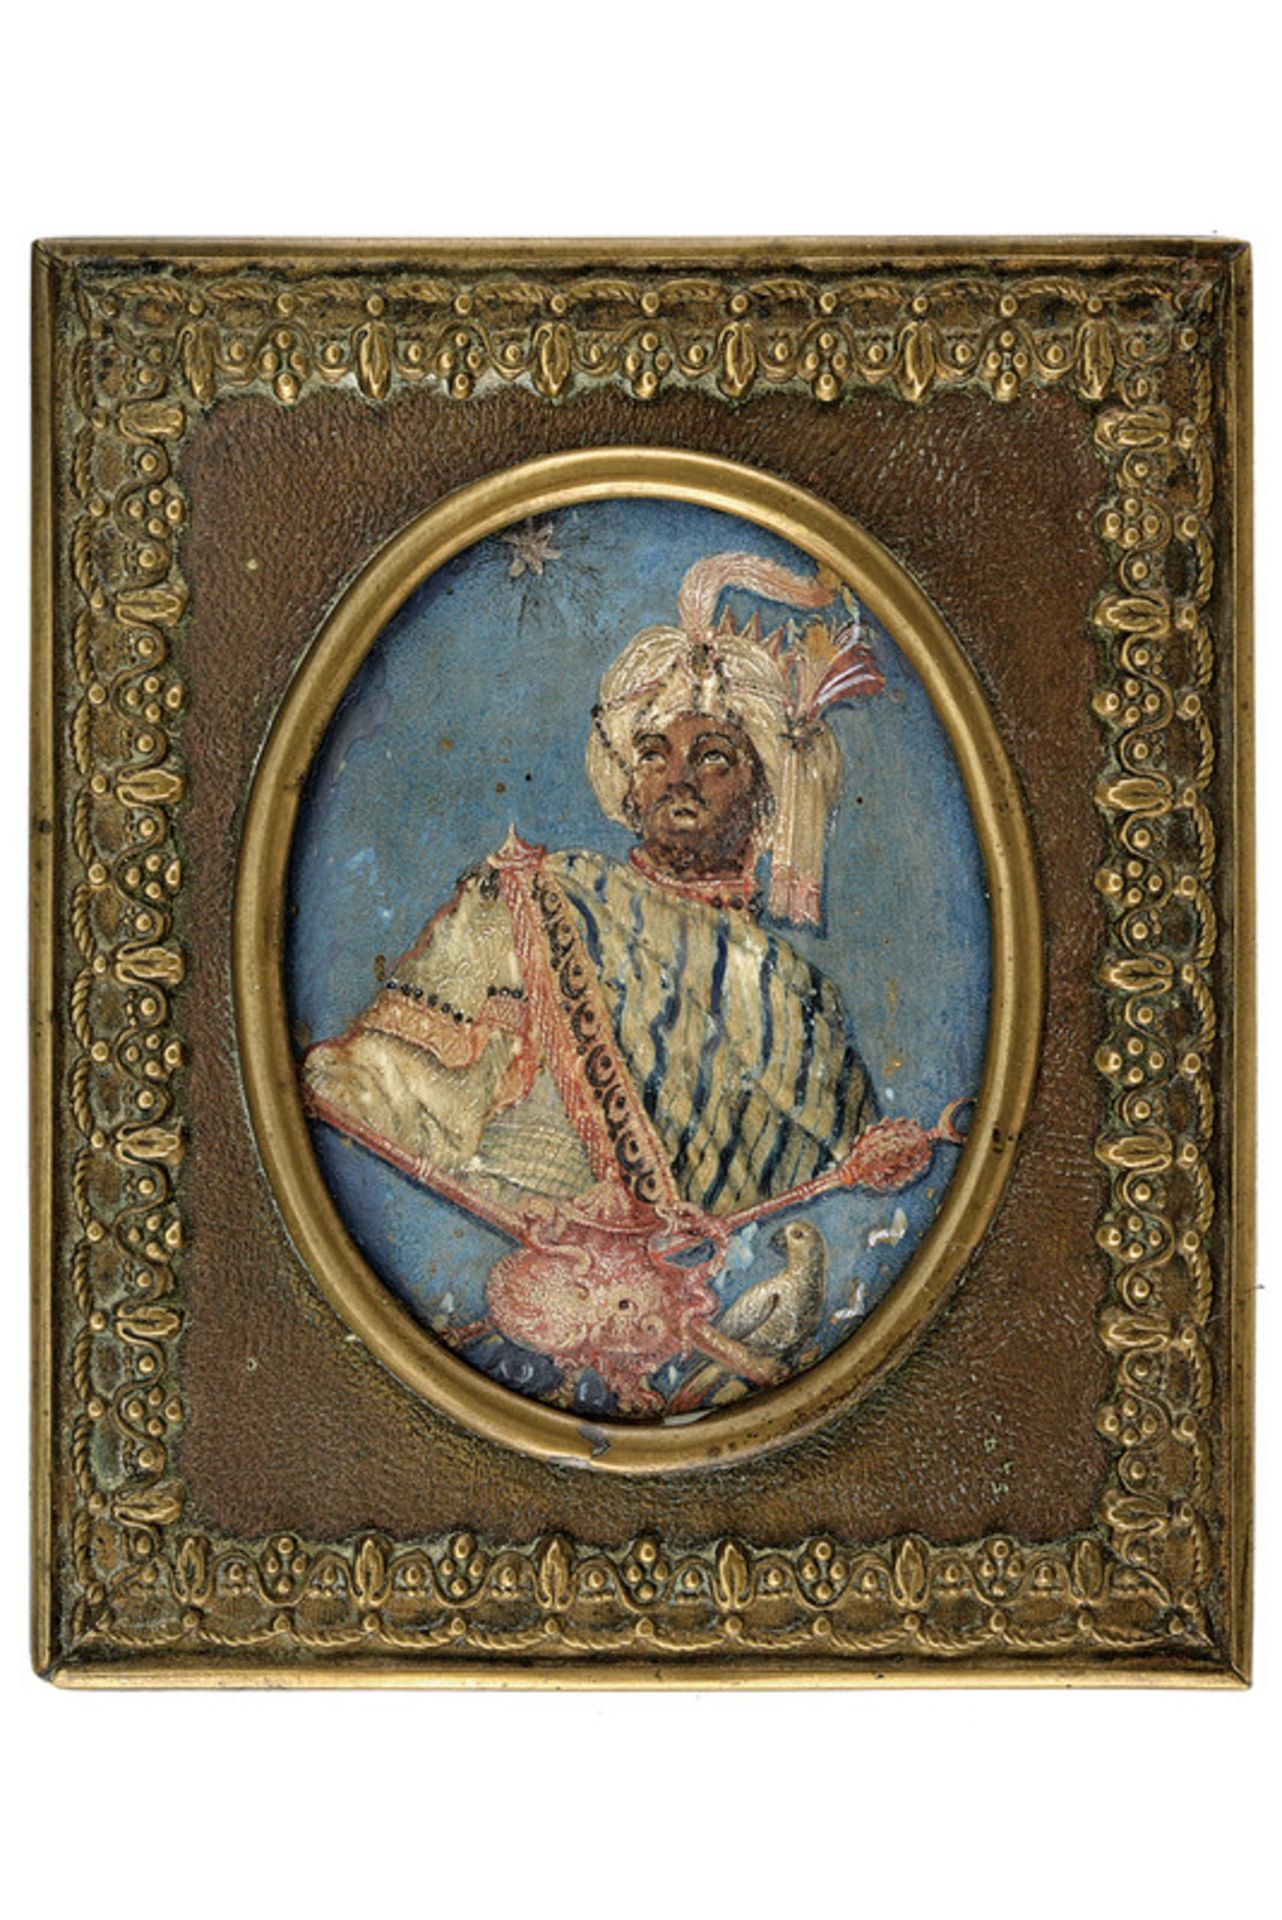 A miniature portrait dating: 19th Century provenance: Turkey Polychrome painting on bone,